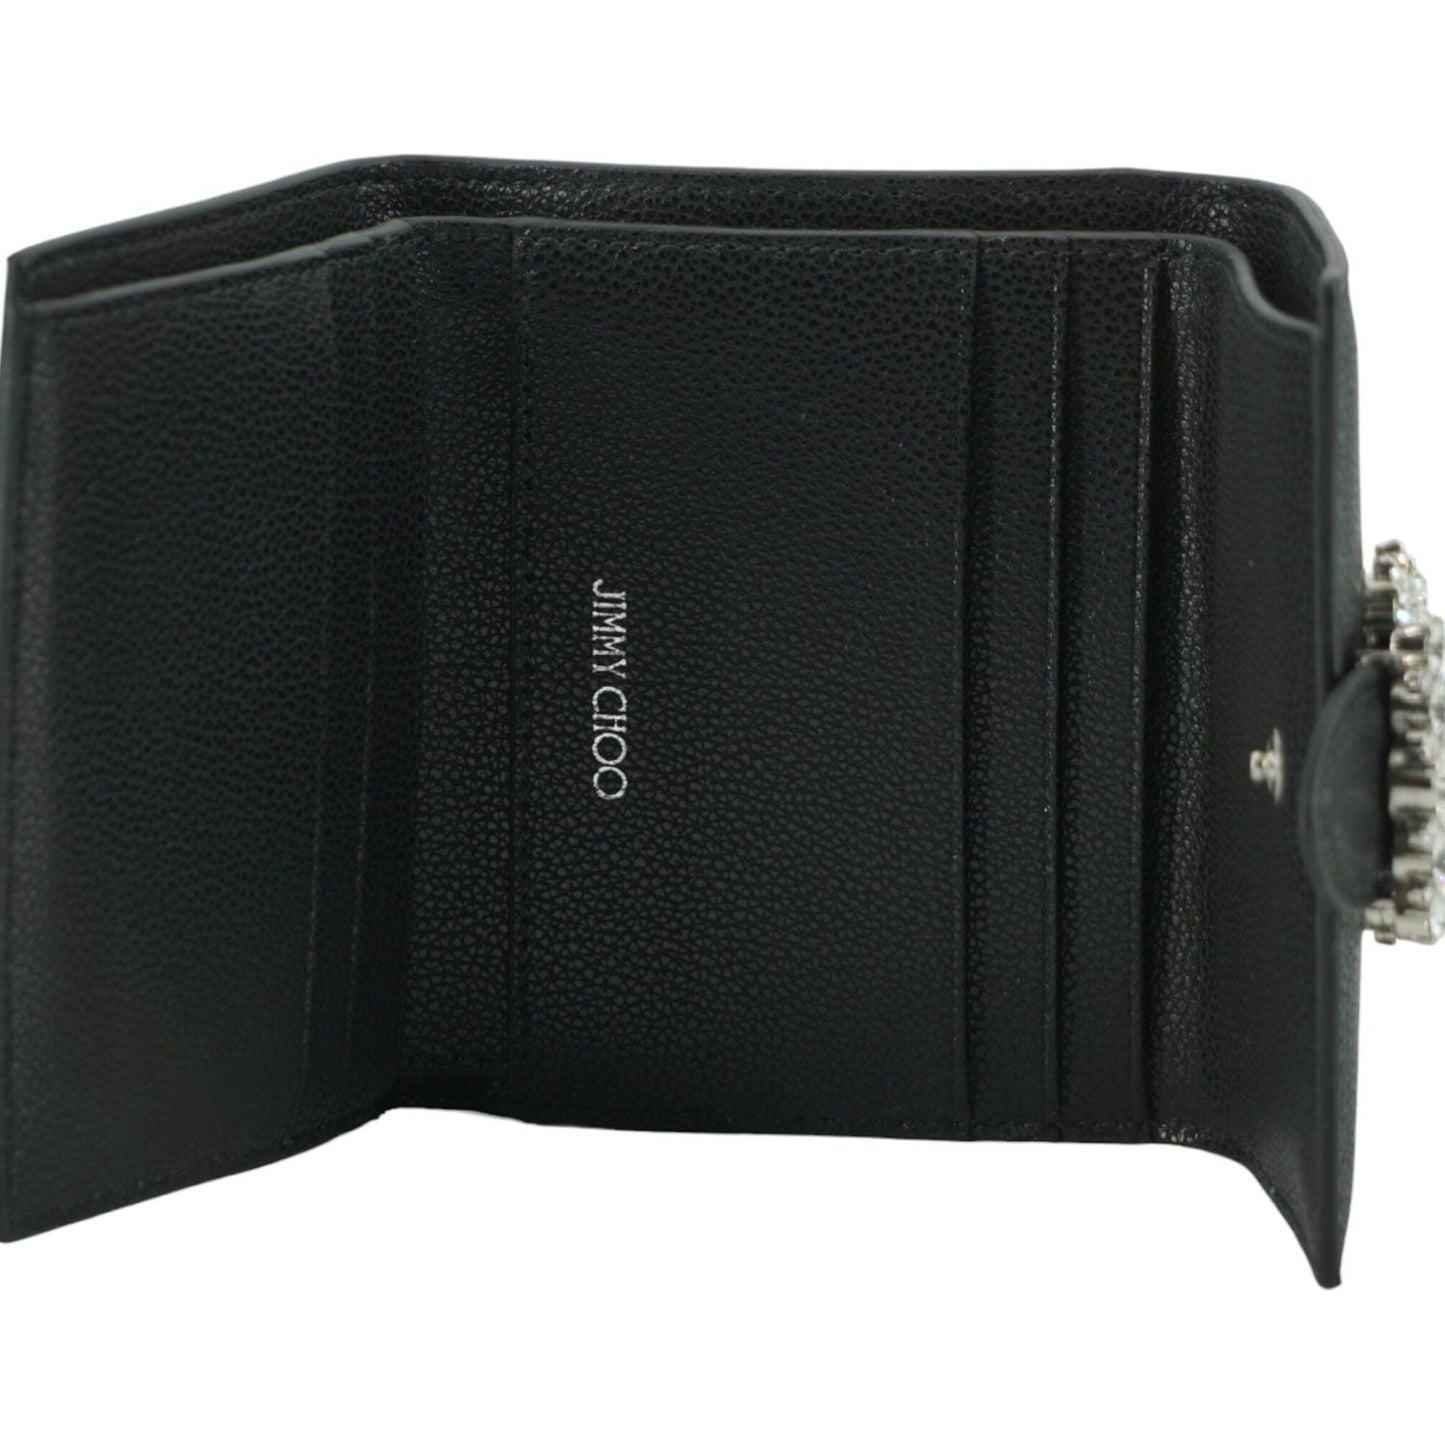 Jimmy Choo Black Leather Card Holder Wallet black-leather-card-holder-wallet